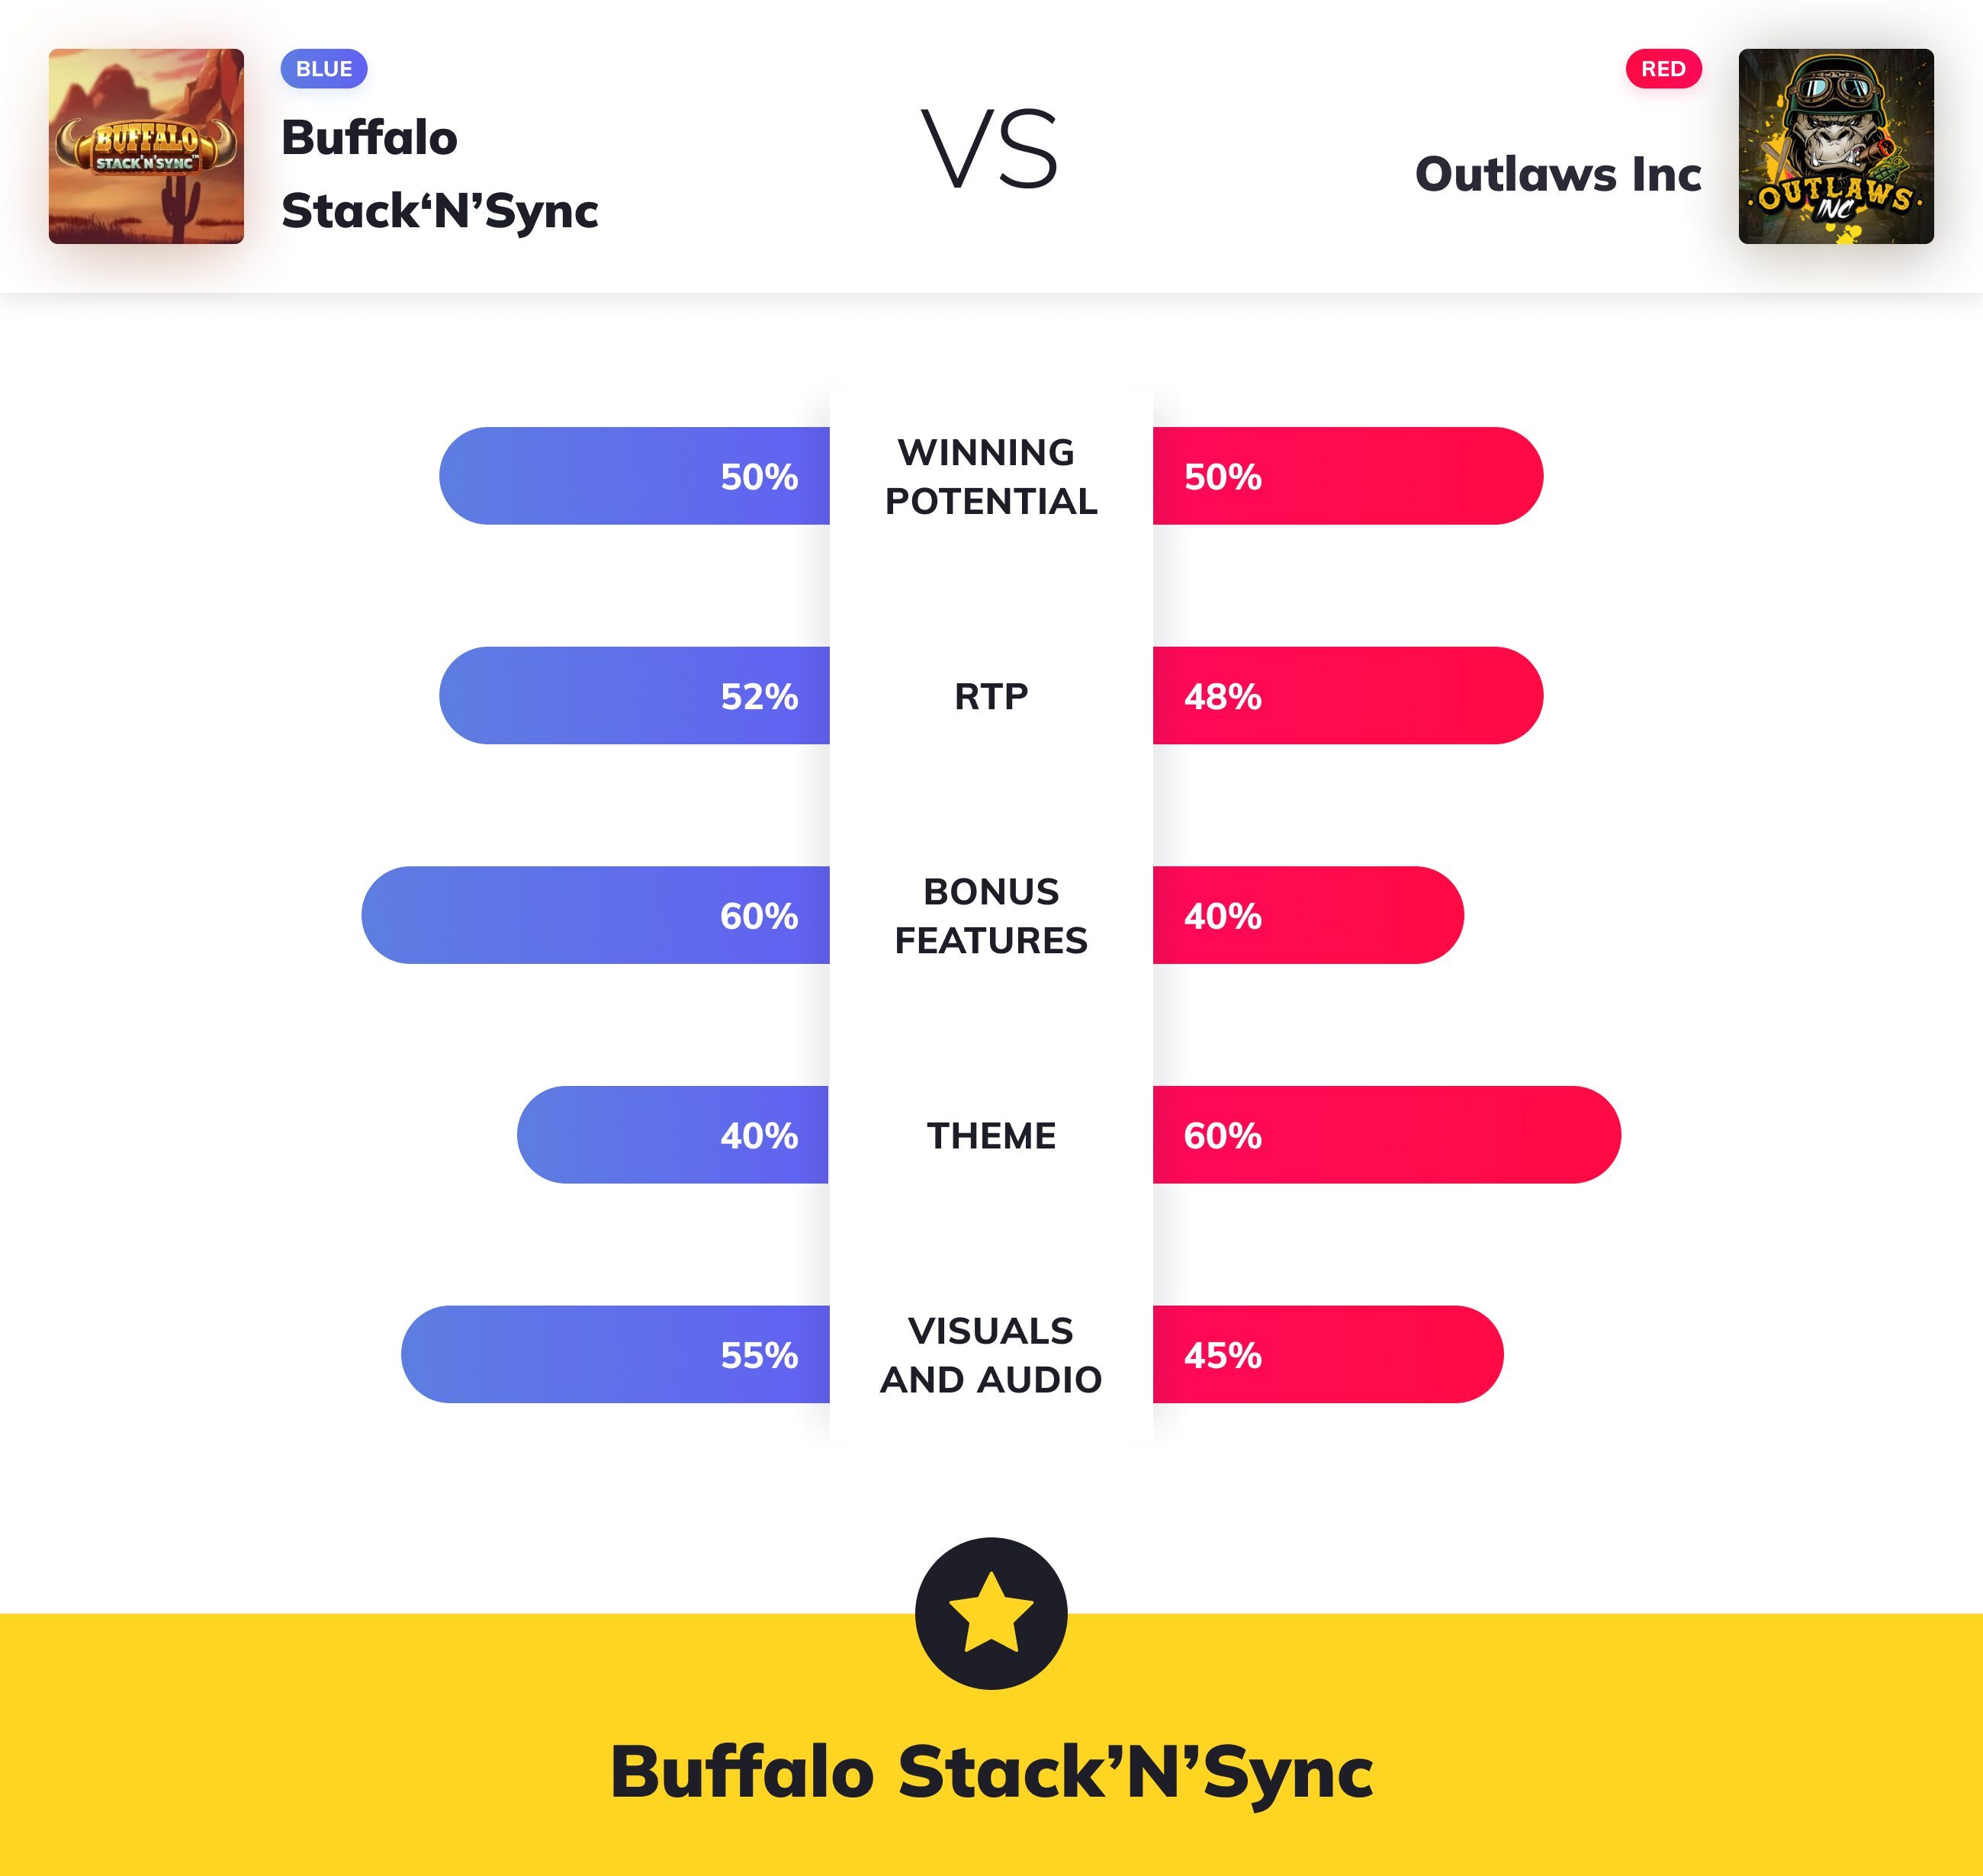 Slot Wars - Buffalo Stack'N'Sync VS Outlaws Inc